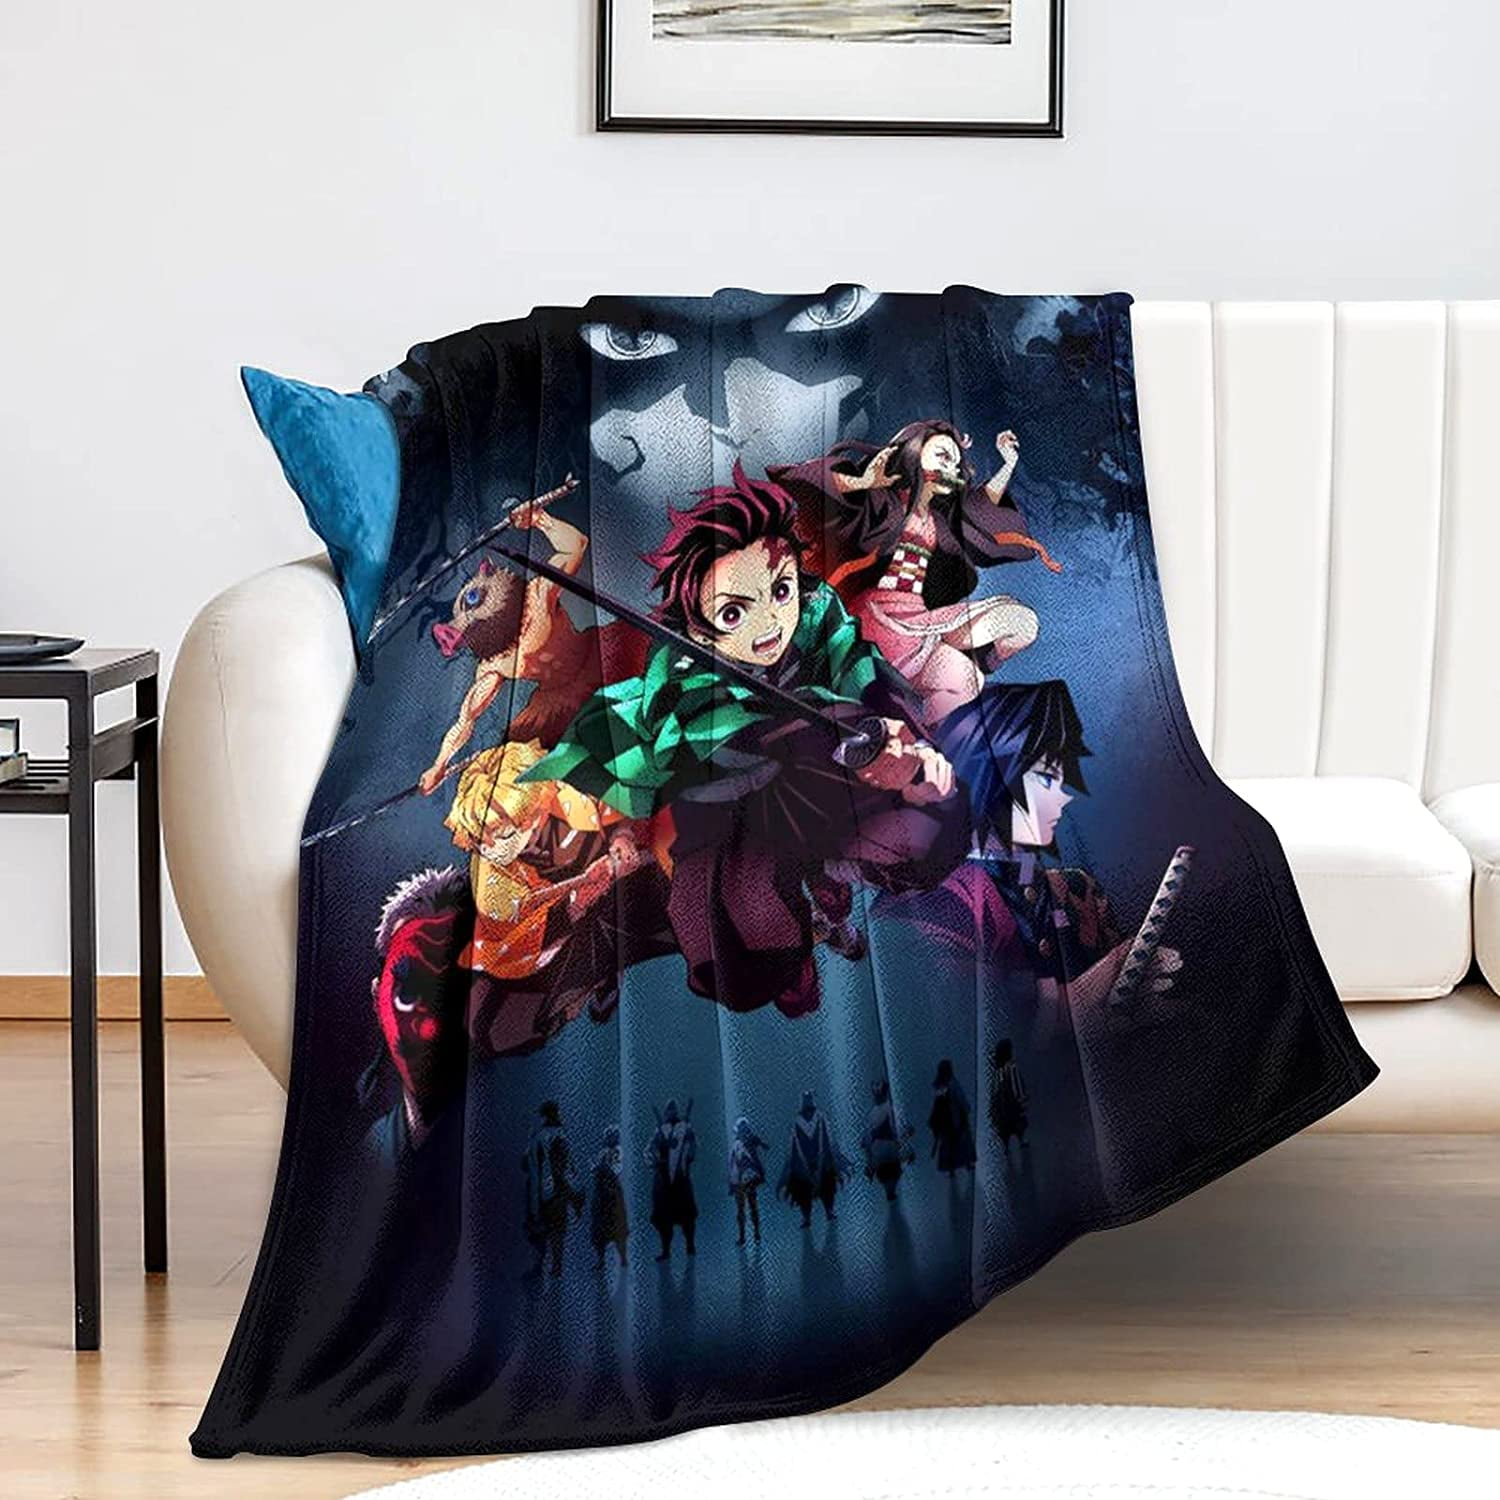 Anime Blanket Gifts for Girls Boys-40x50 Inches Soft Flannel Blanket Anime Gifts for Teen Girls Kids Comfy Anime Lover Stuff Kawaii Anime Room Decor